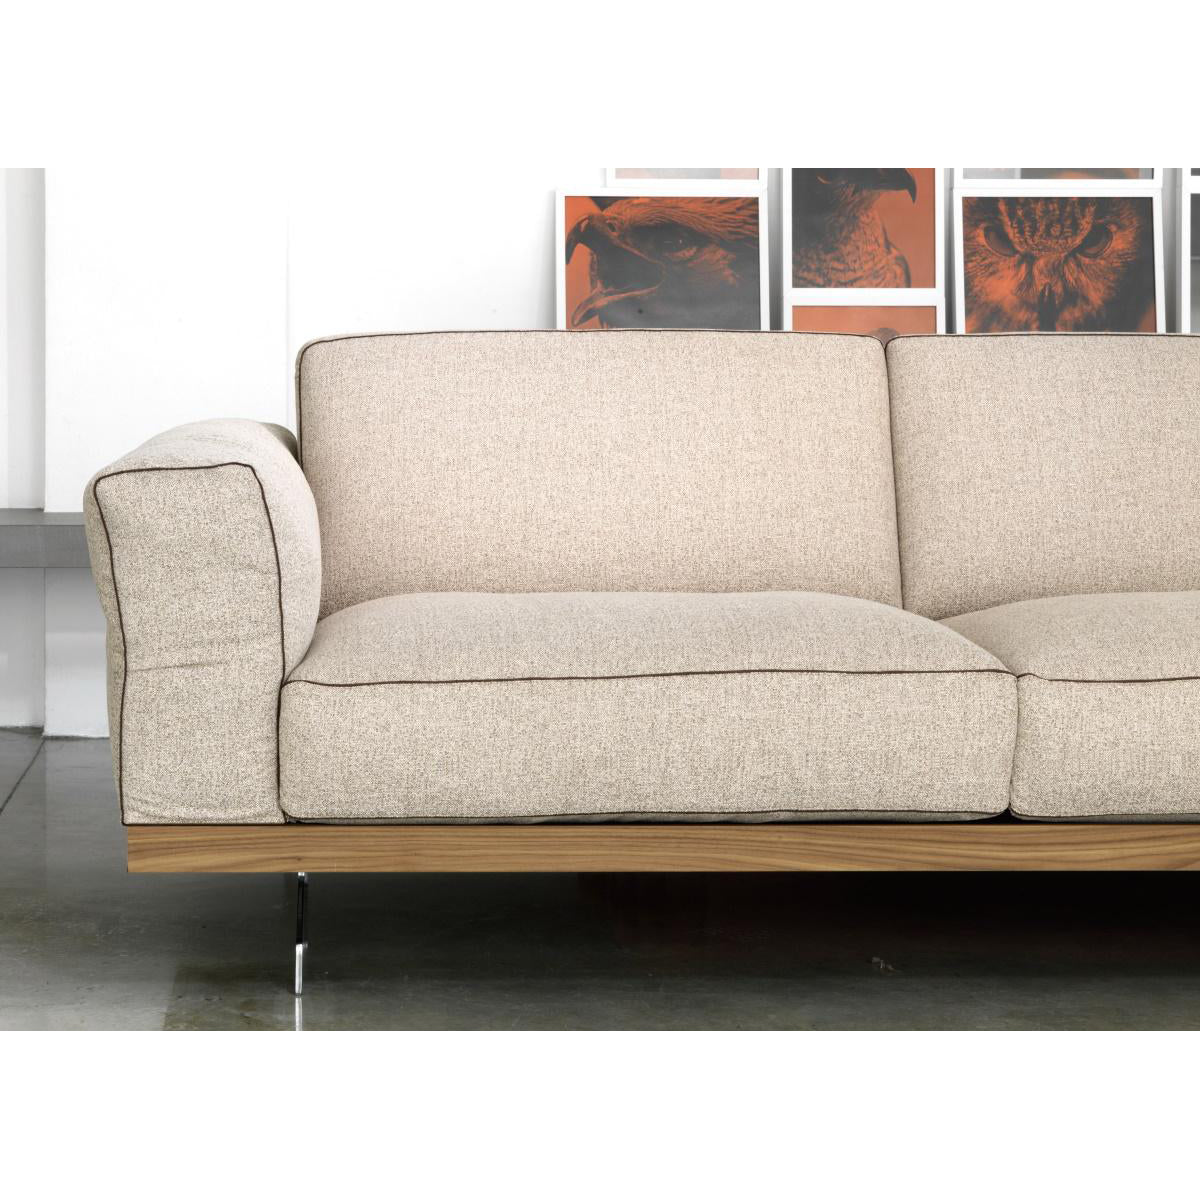 Beech wood corner sofa 160 x 220 cm - FACT347